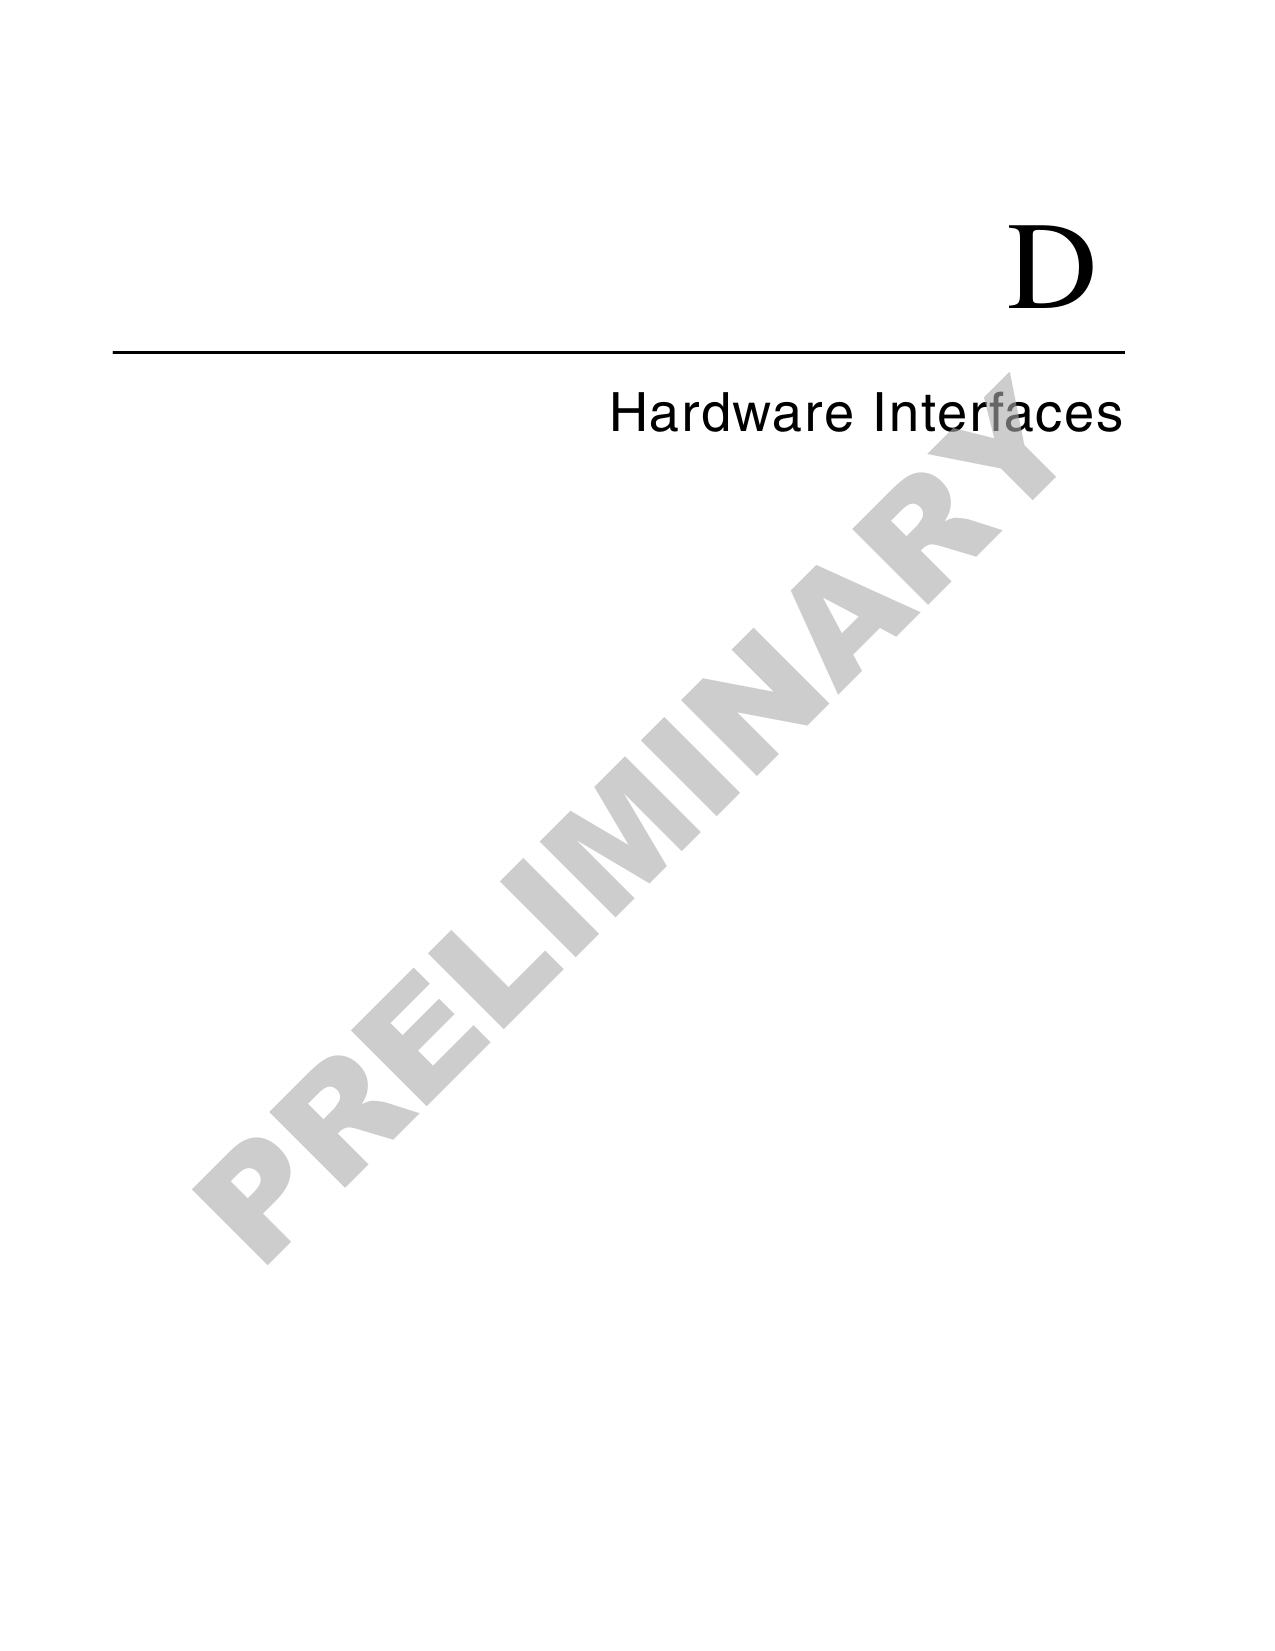 DHardware InterfacesPRELIMINARY